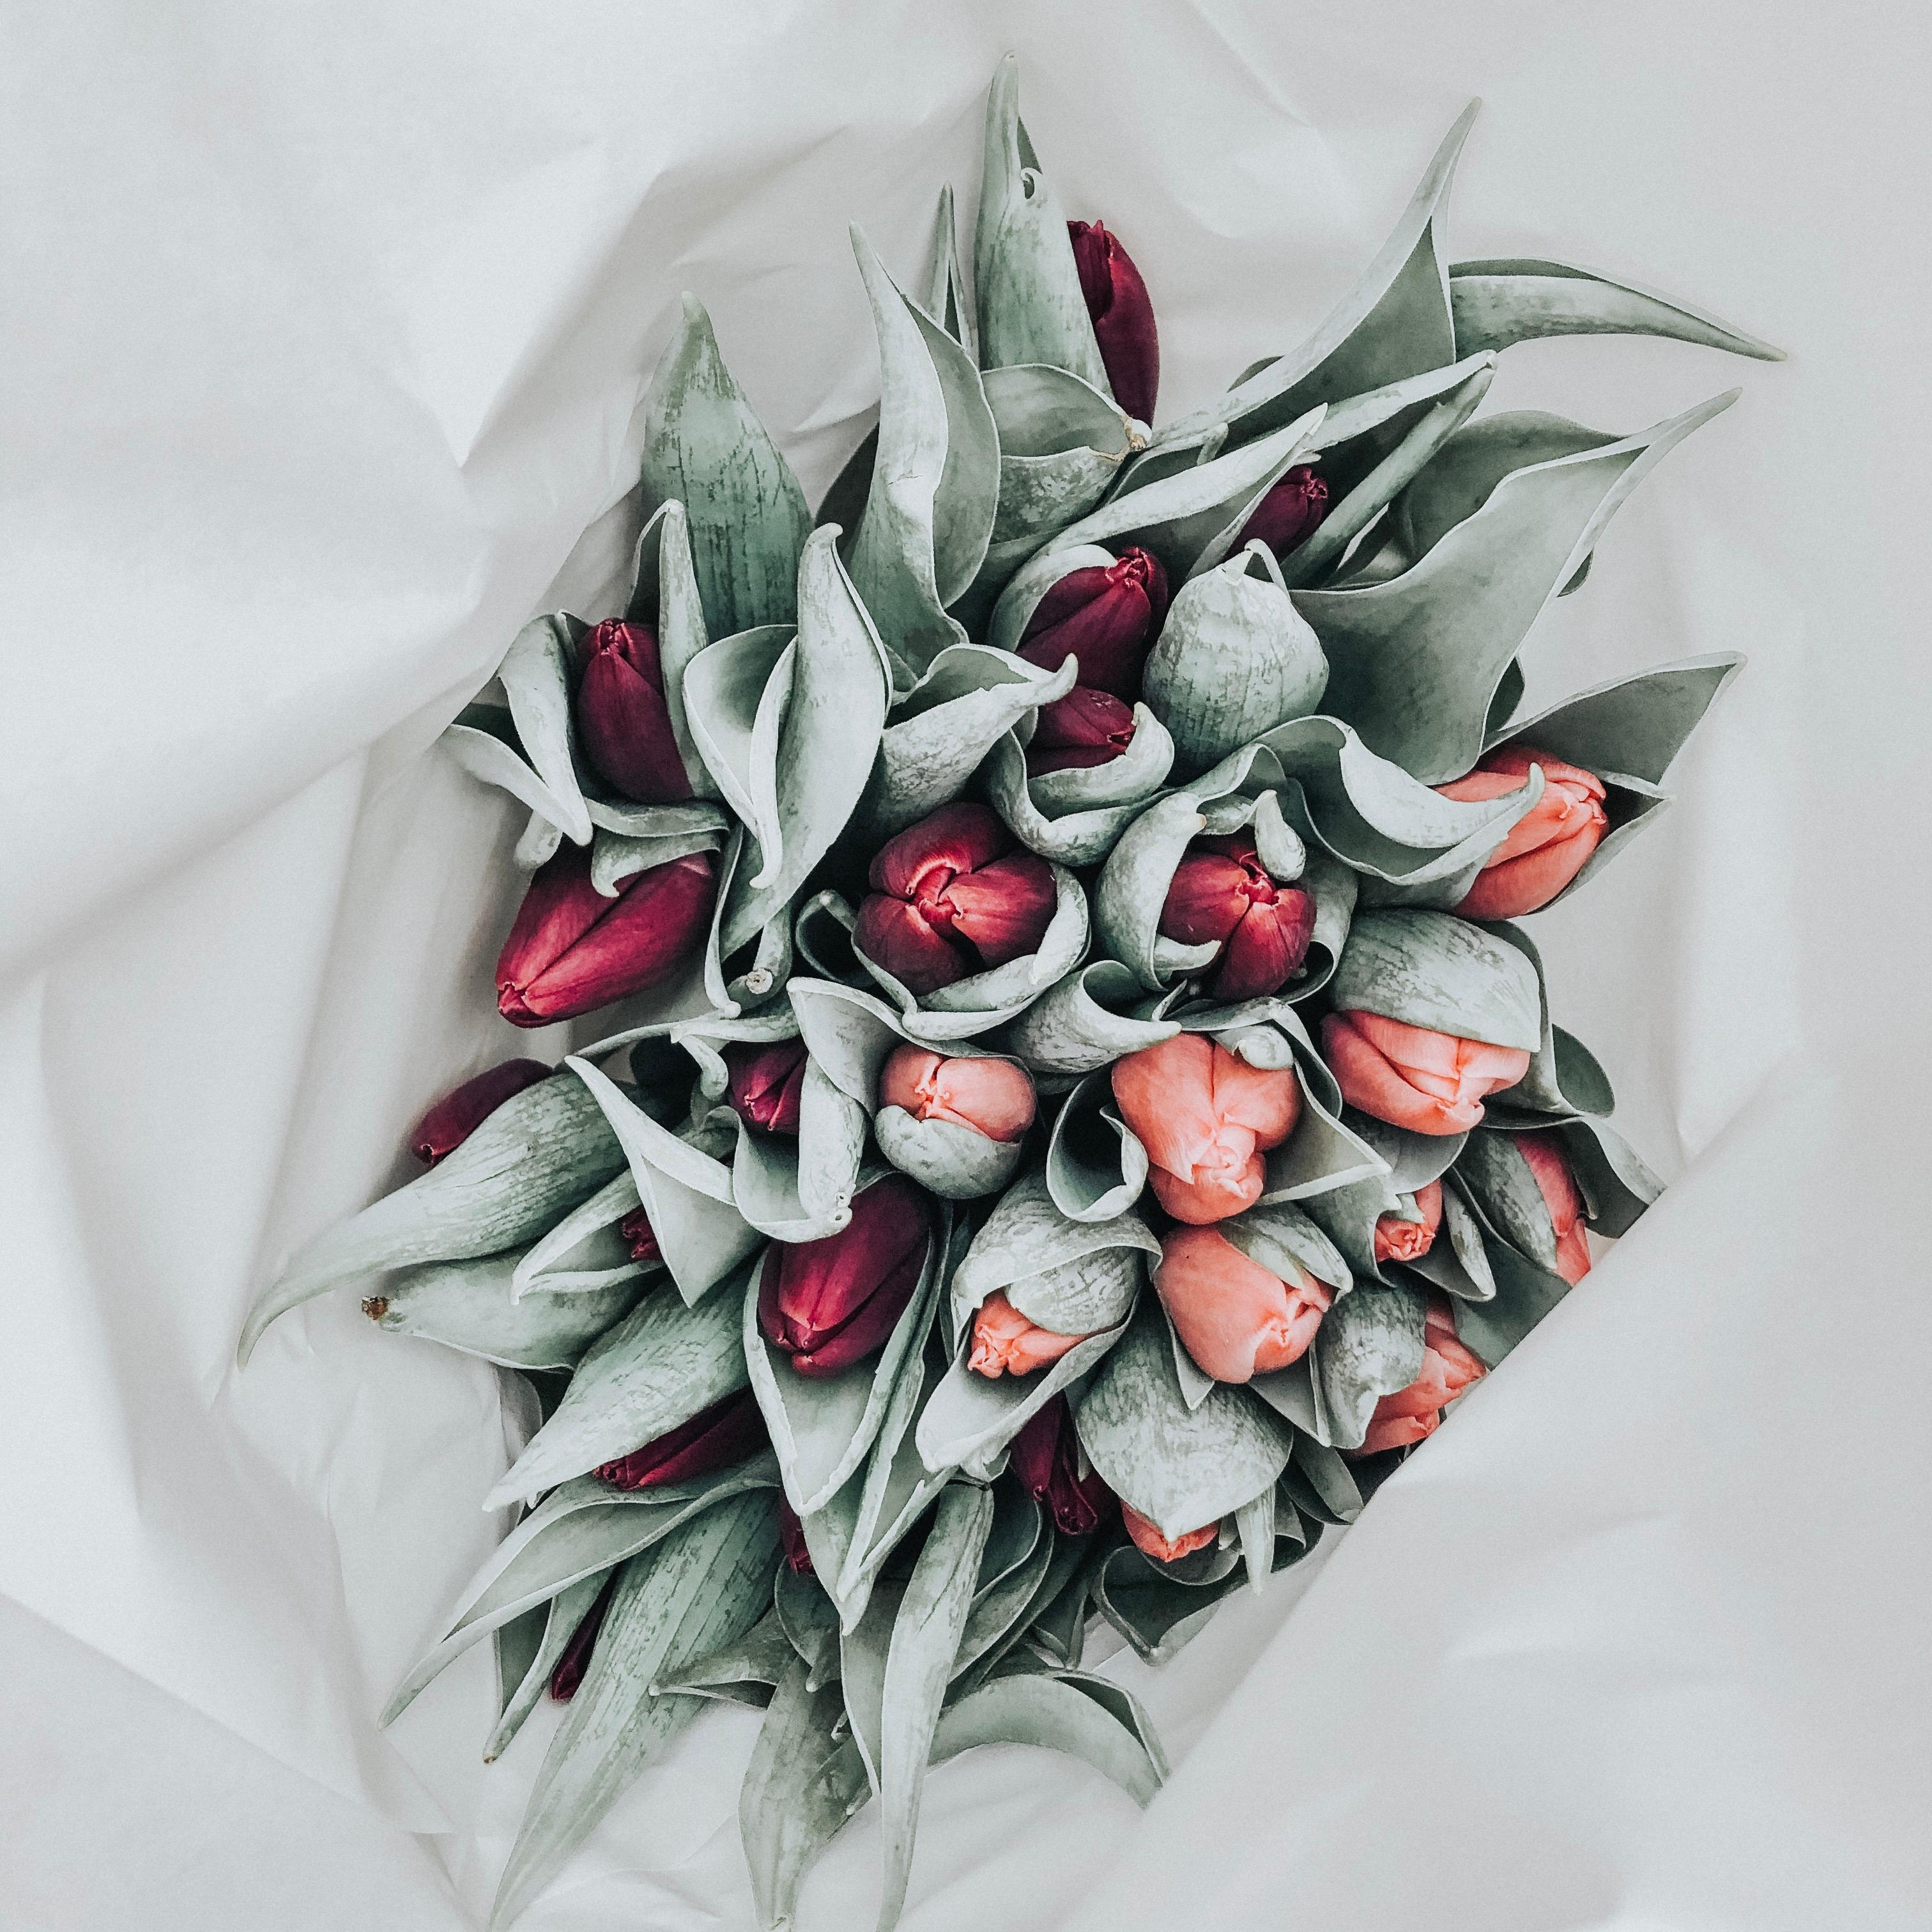 pure happiness #fridayflowers #blumen #bouquet #interior #homedecor #thesimplethings #dekor #bunt